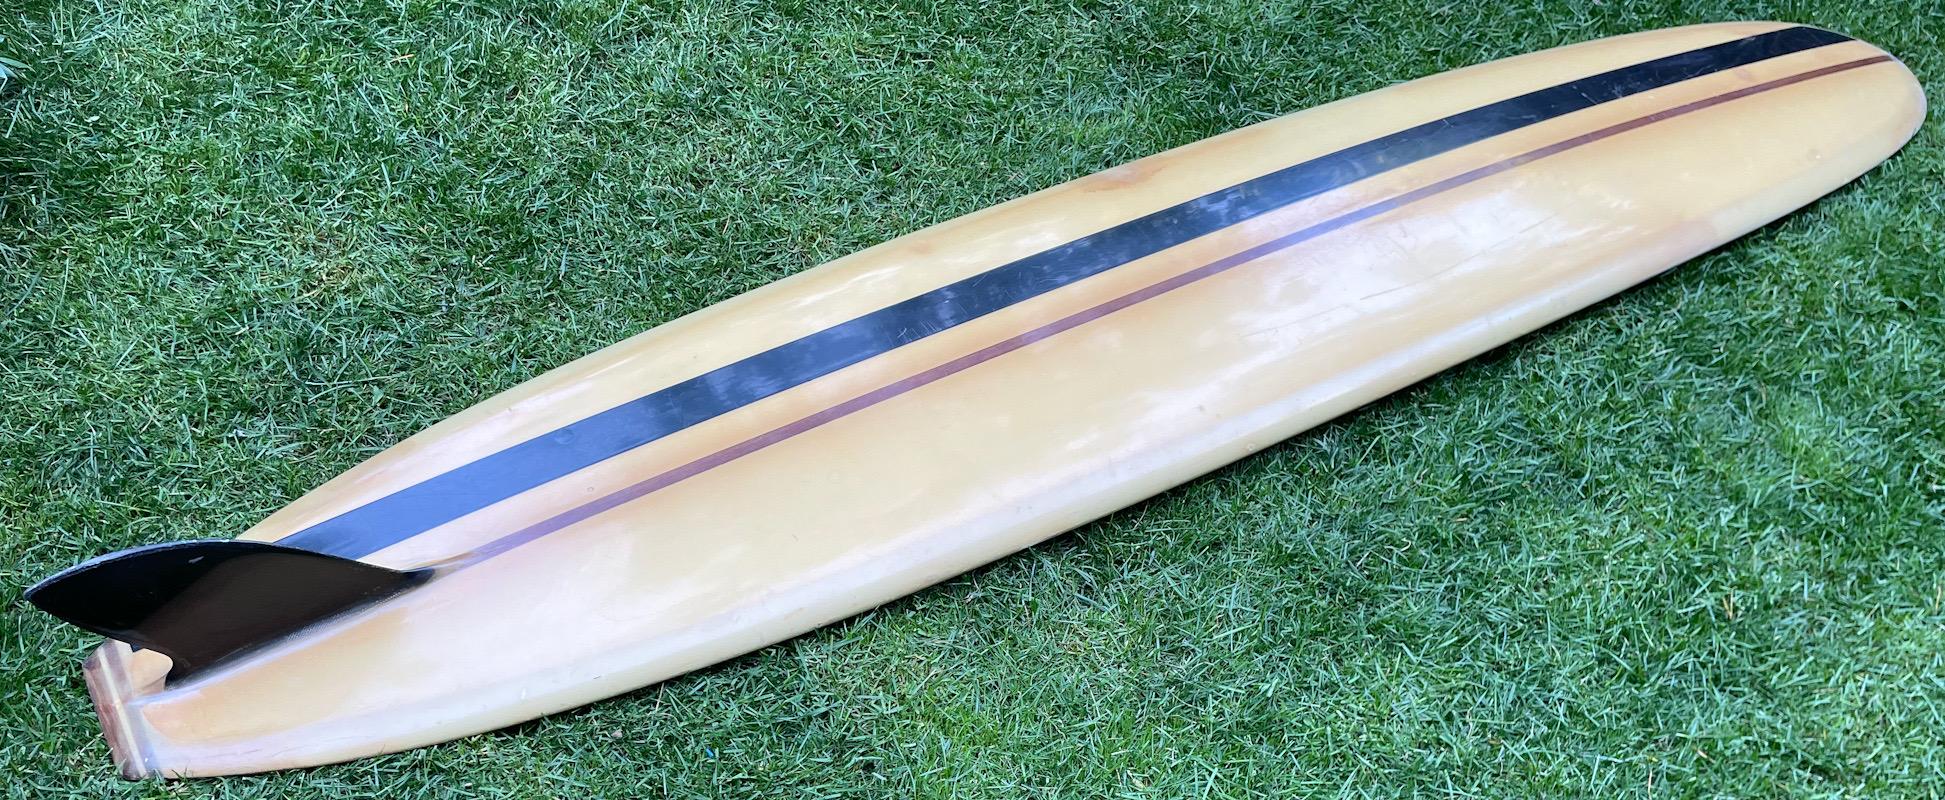 greg noll surfboard for sale